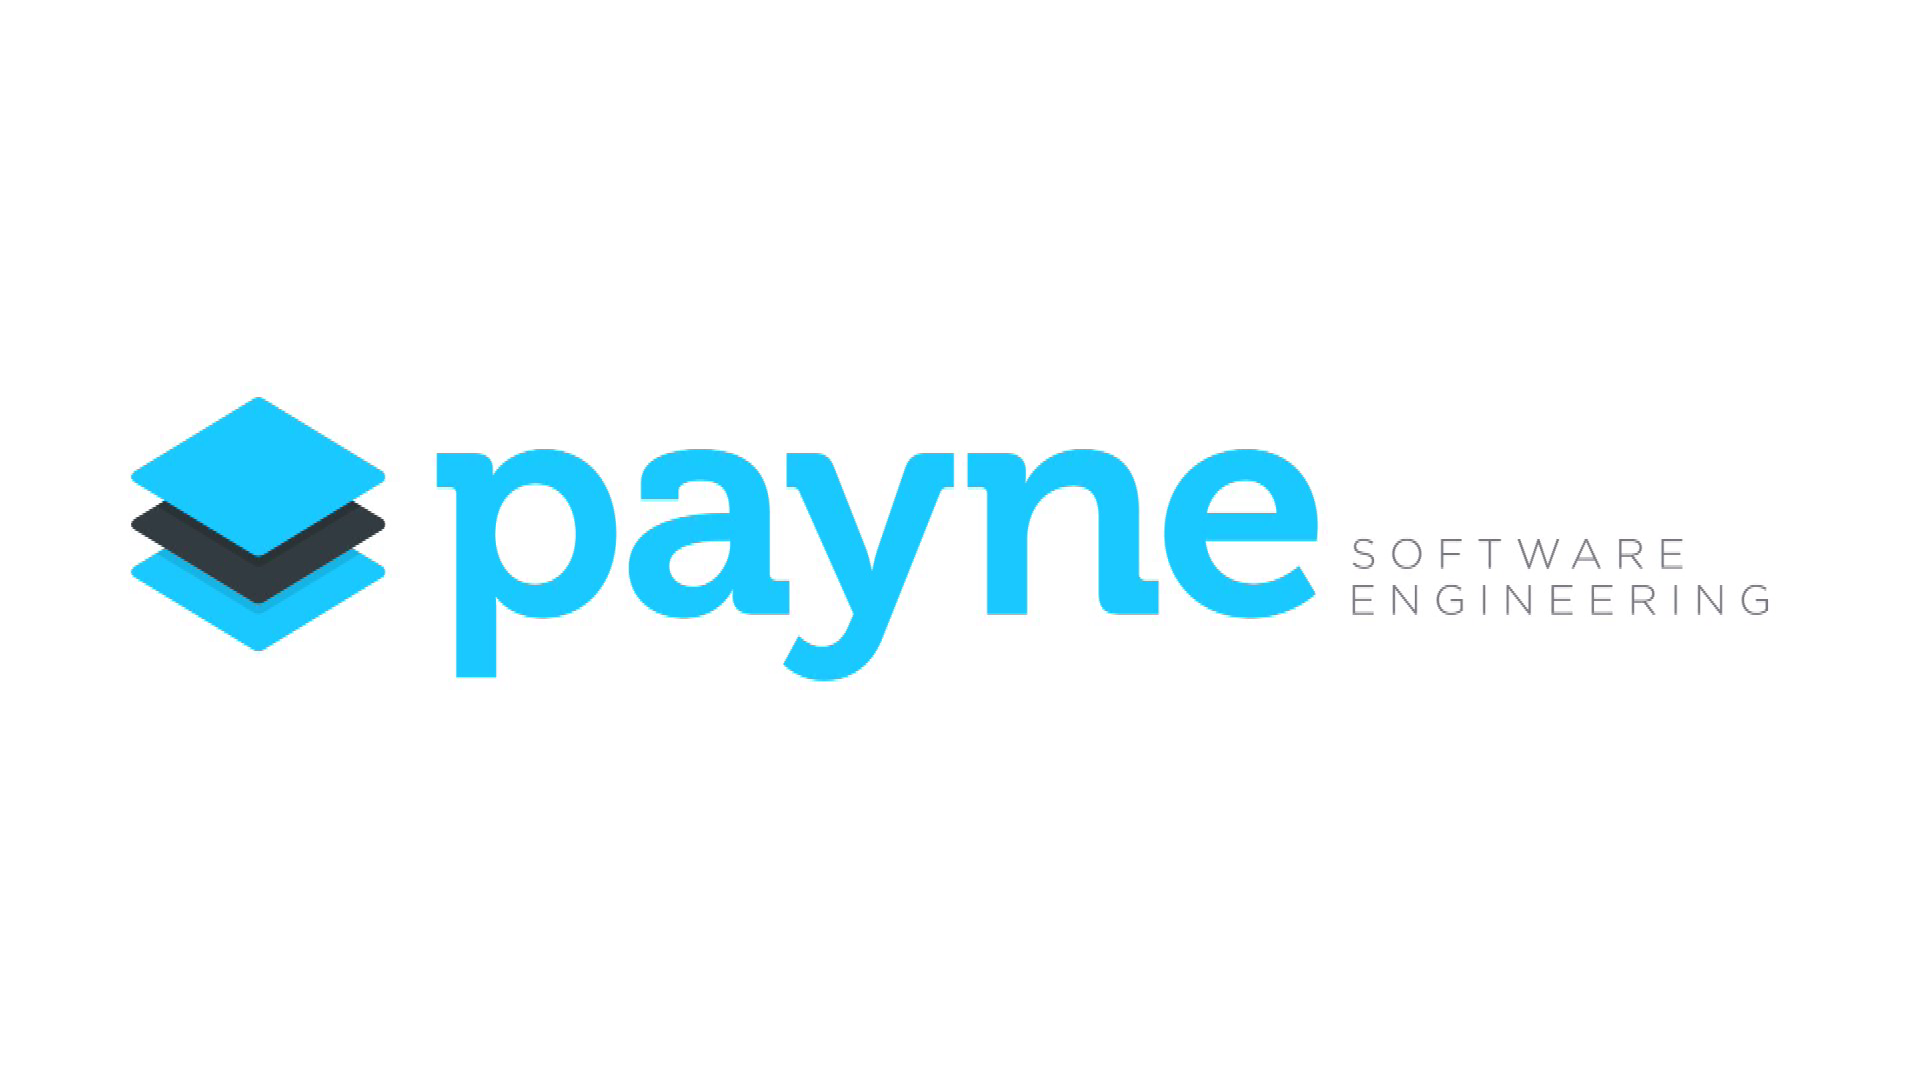 Payne Software Engineering